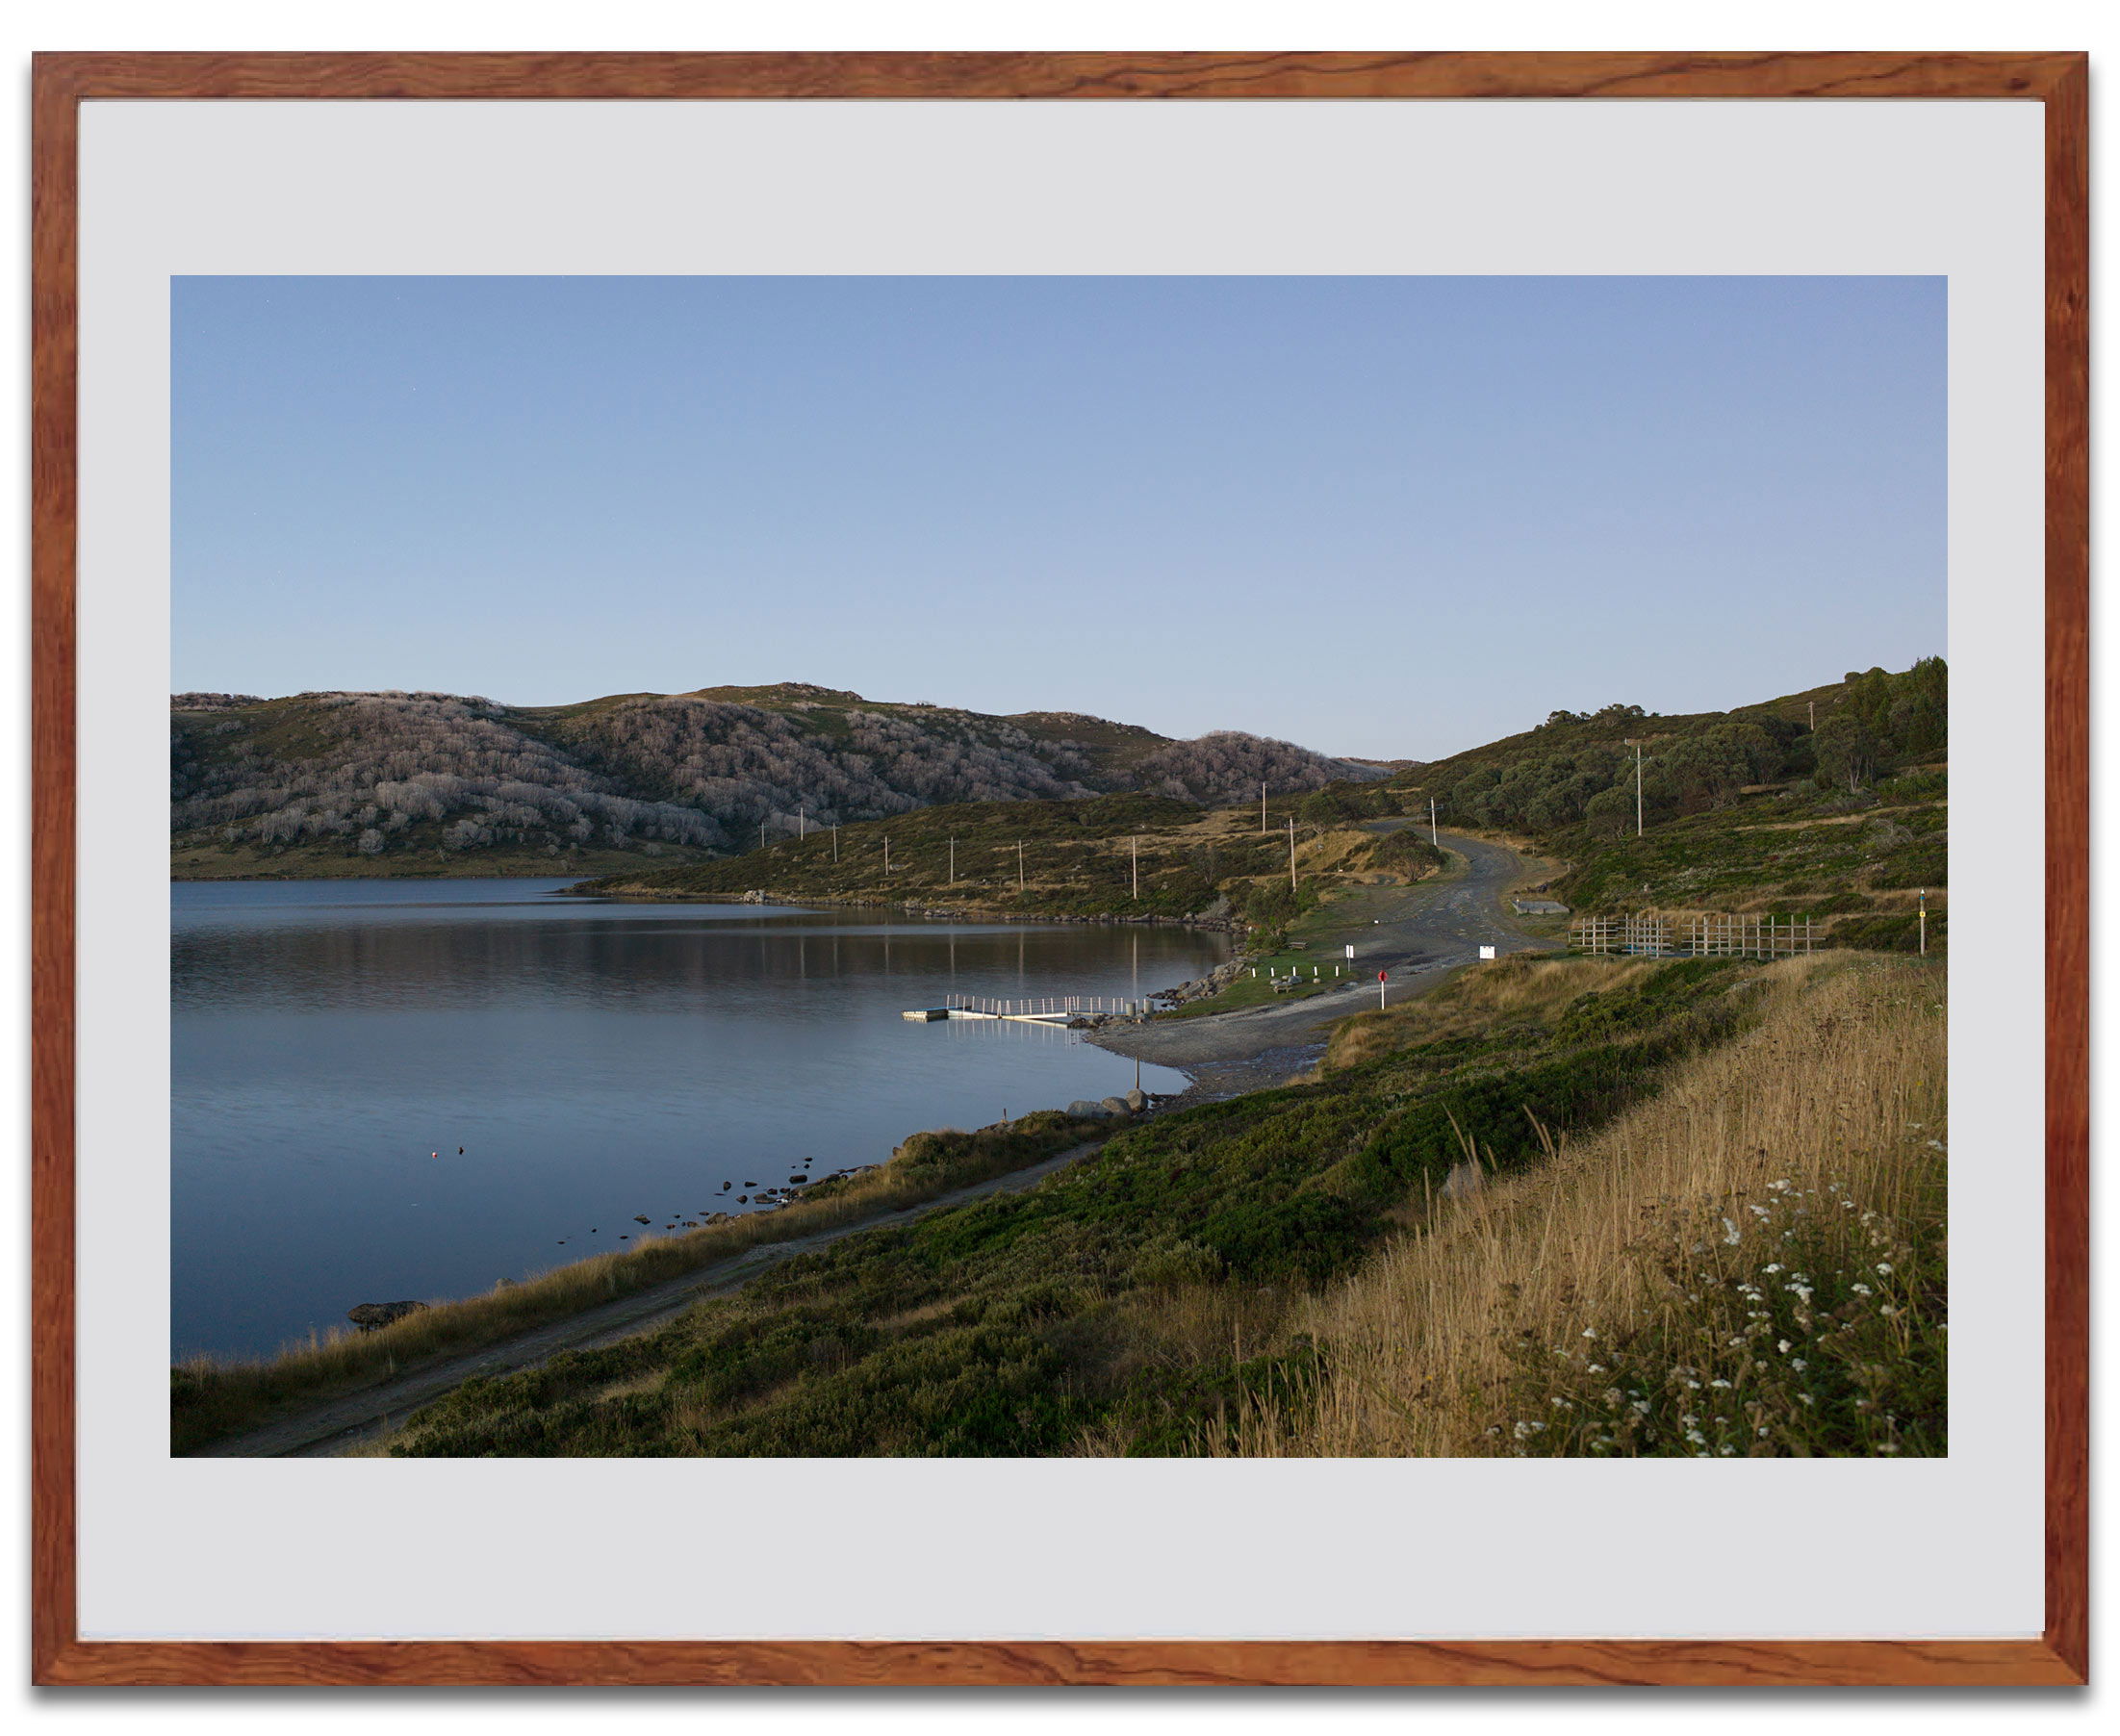 Rocky valley dam framed